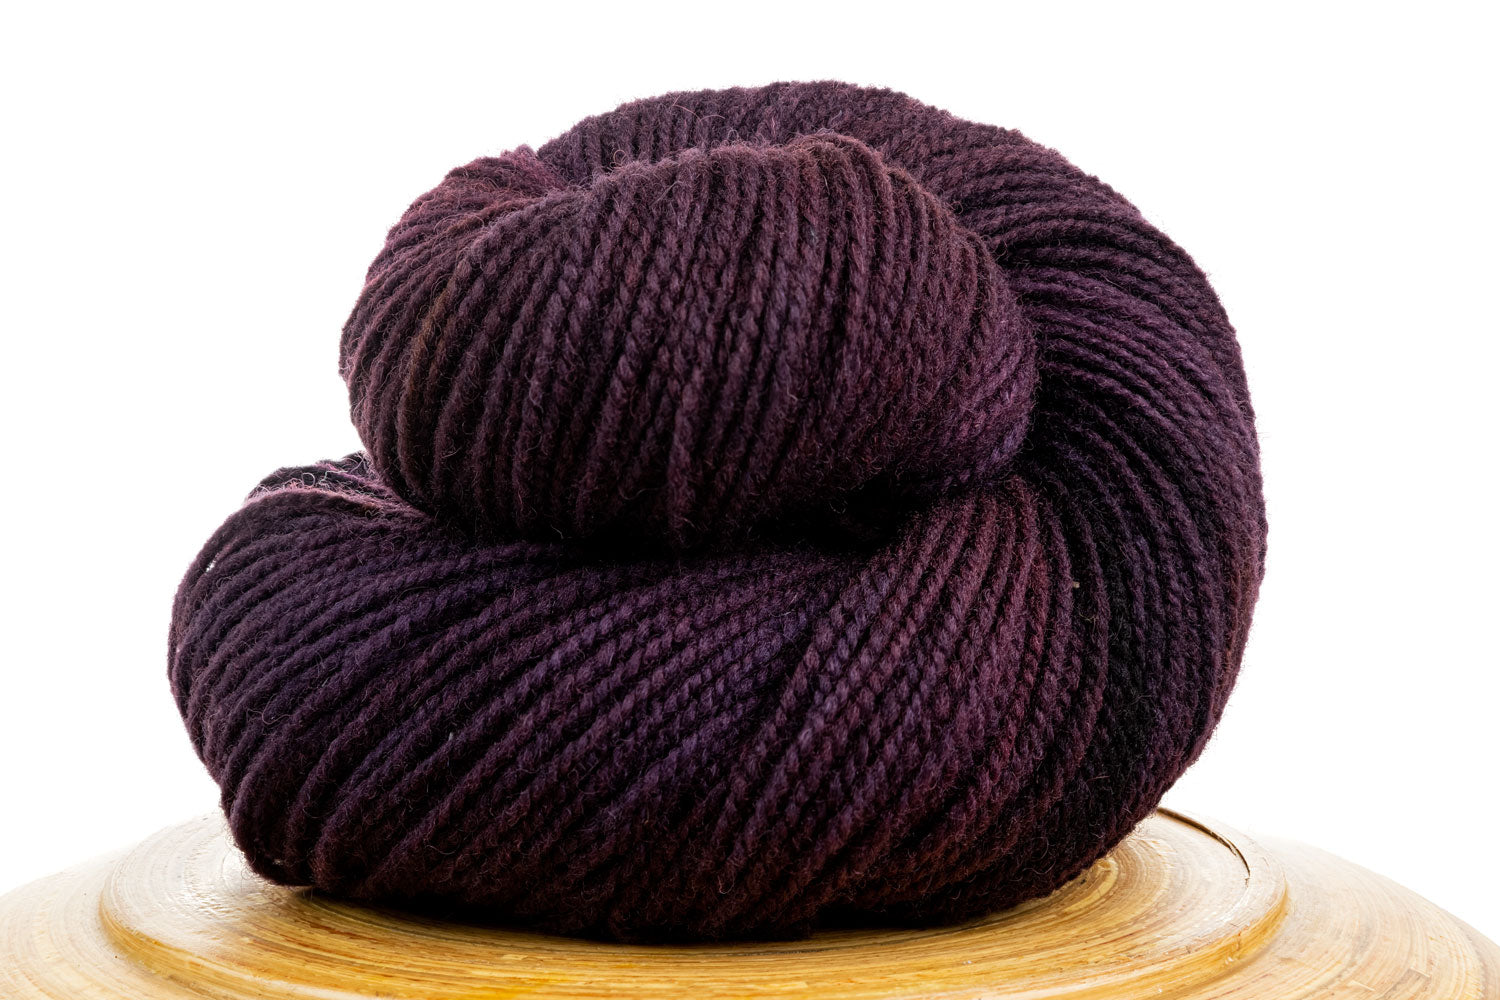 Winfield Canadian hand-dyed wool yarn in Northern Sky, a dark purple